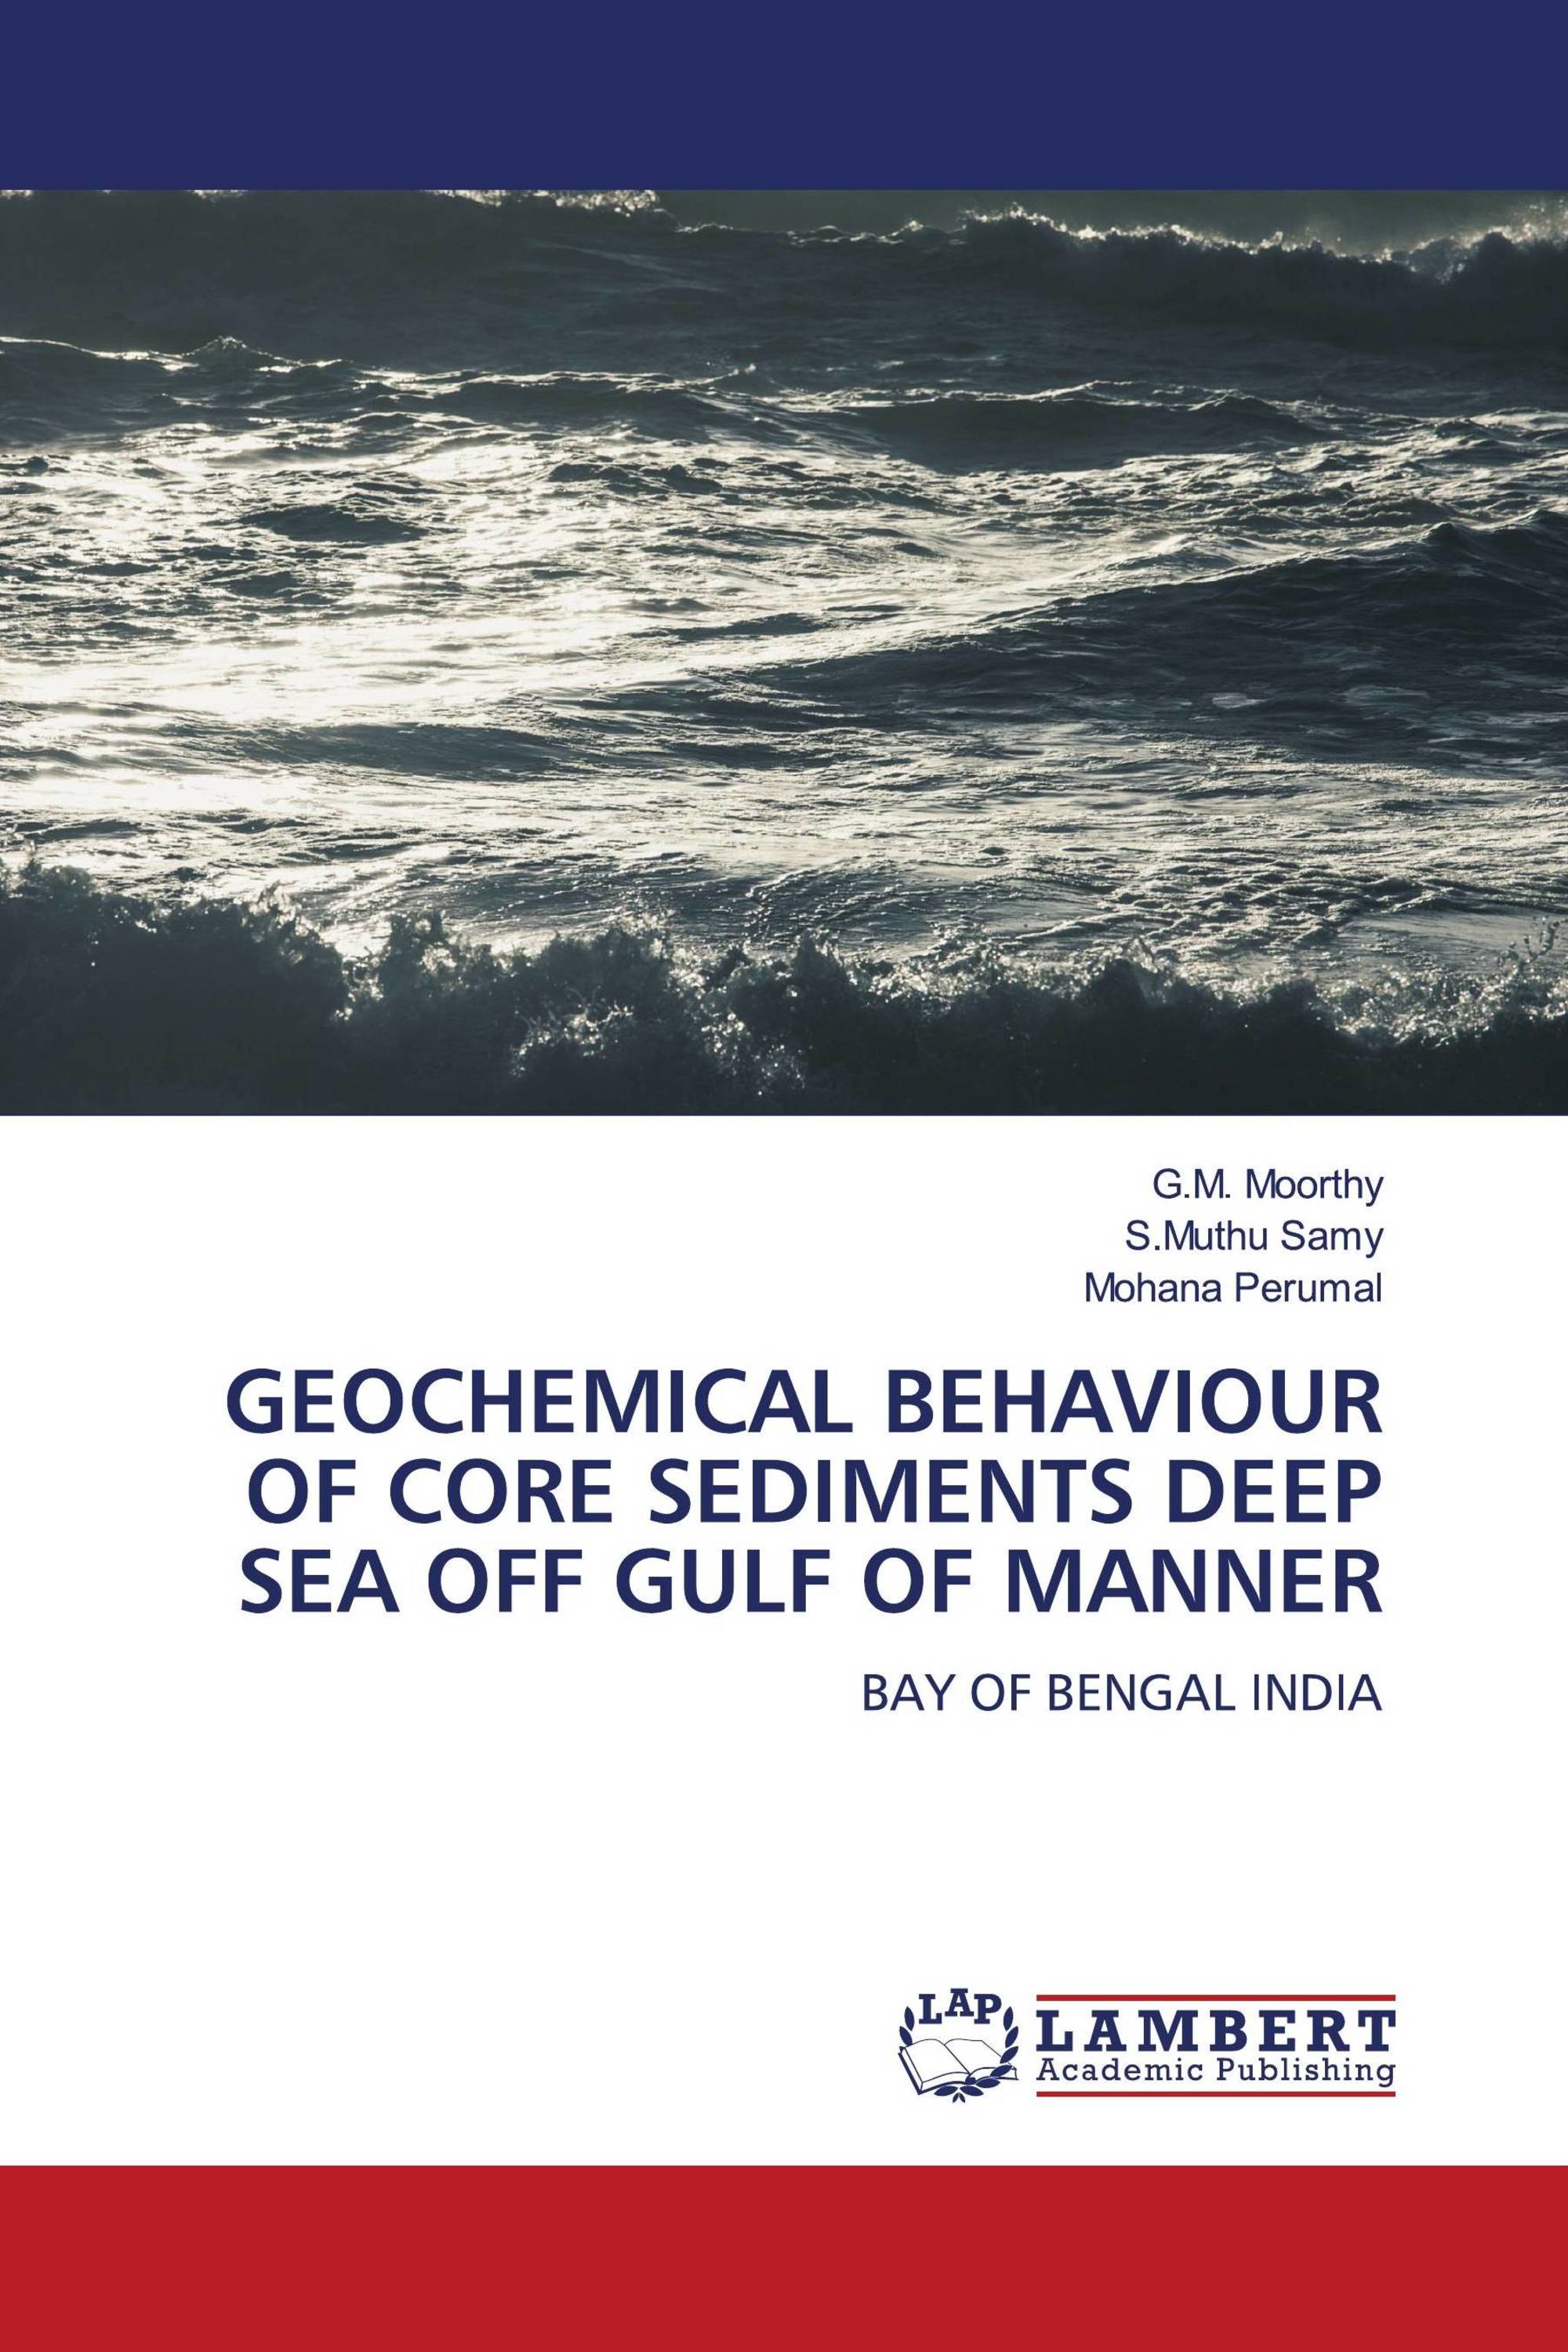 GEOCHEMICAL BEHAVIOUR OF CORE SEDIMENTS DEEP SEA OFF GULF OF MANNER